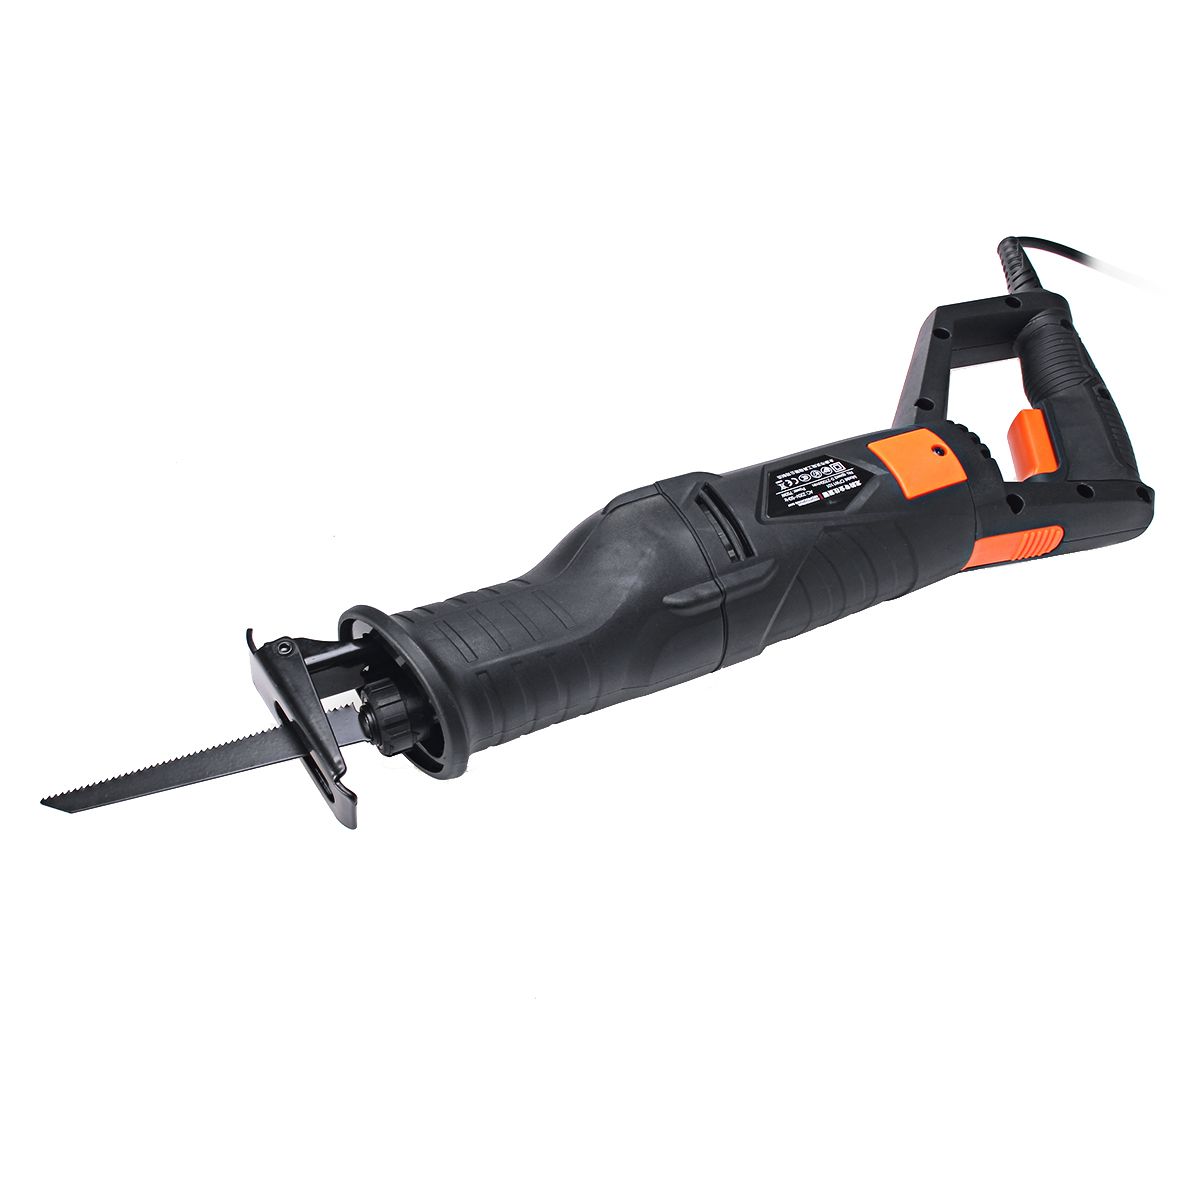 220V-750W-Mini-Electric-Reciprocating-Saw-Handheld-Wood-Cutting-Brush-Tool-Kit-1522120